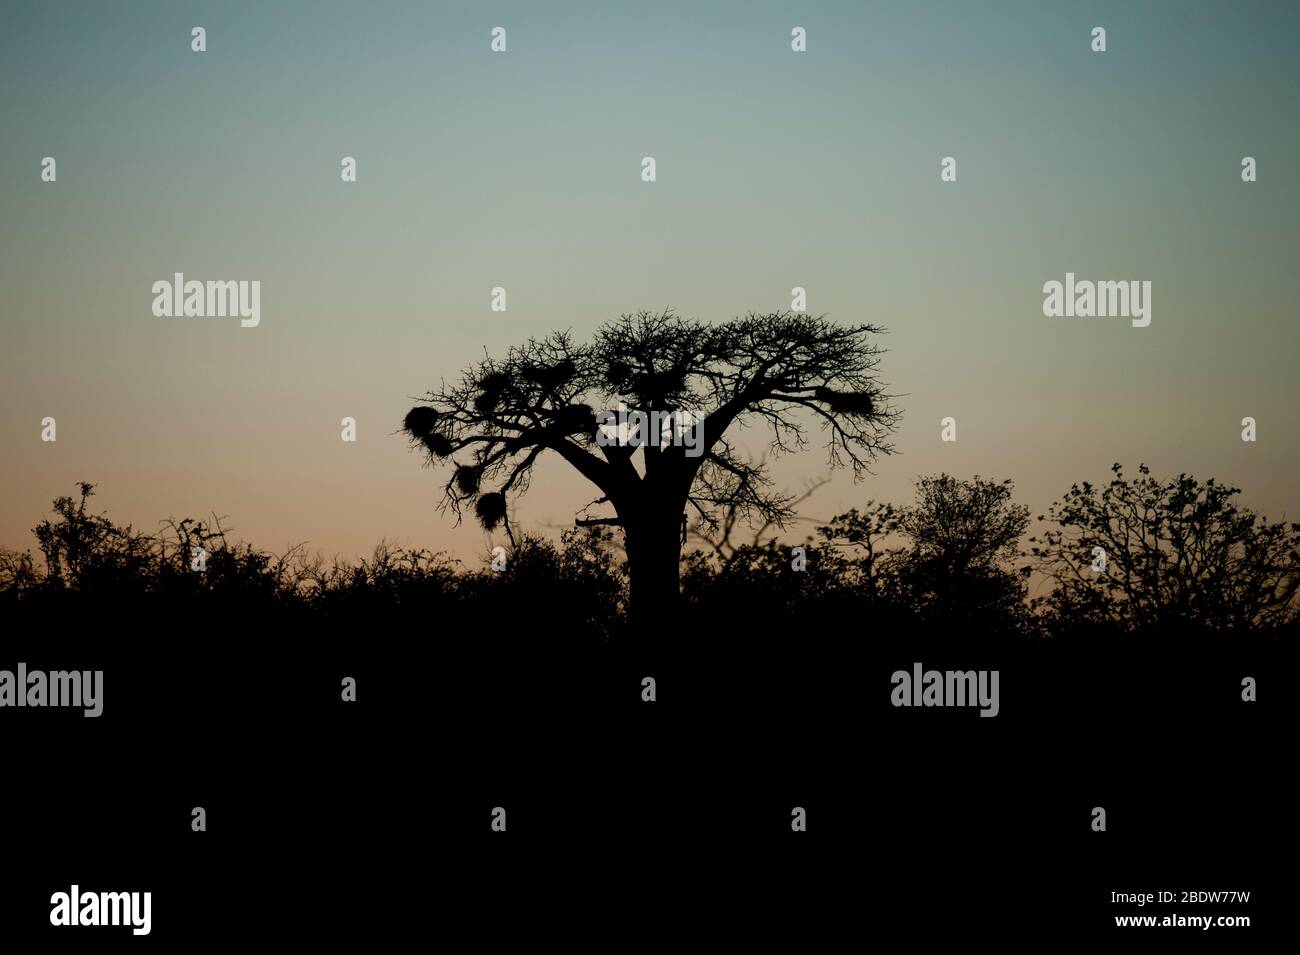 Baobob Tree, Adansonia digitata, silhouette with Sociable Weaver nests, Philetairus socius, at dawn, Kruger National Park, Mpumalanga province Stock Photo